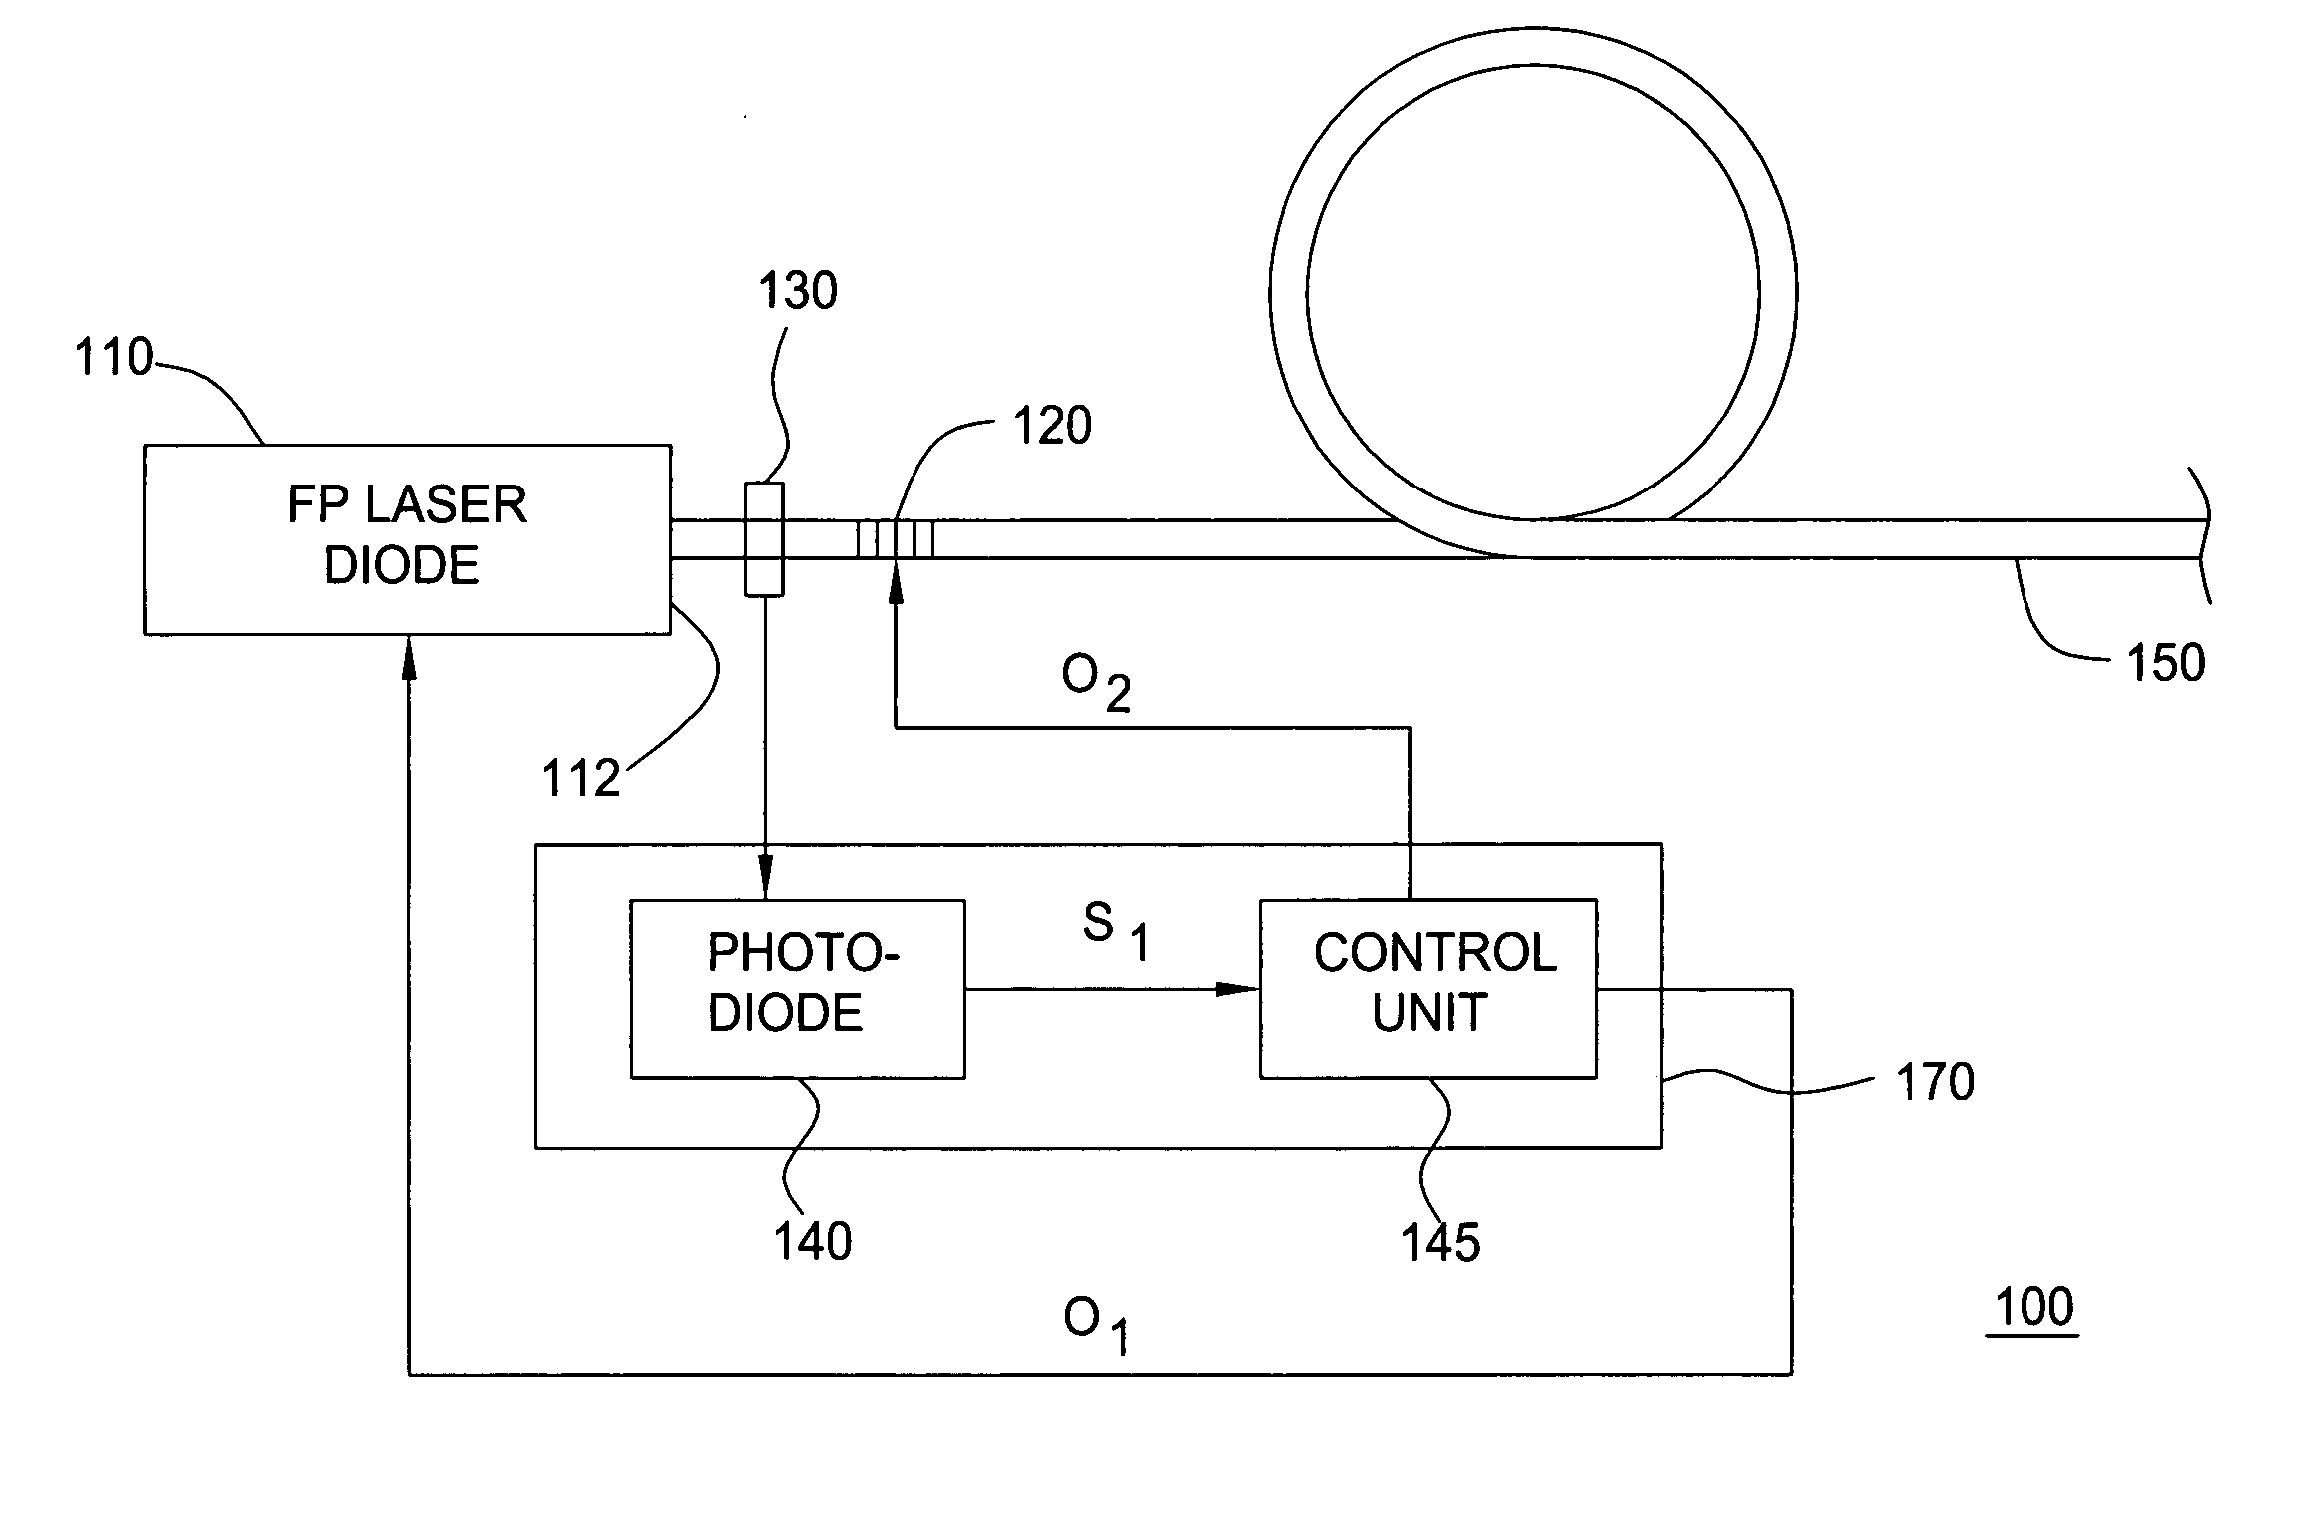 Low relative intensity noise fiber grating type laser diode